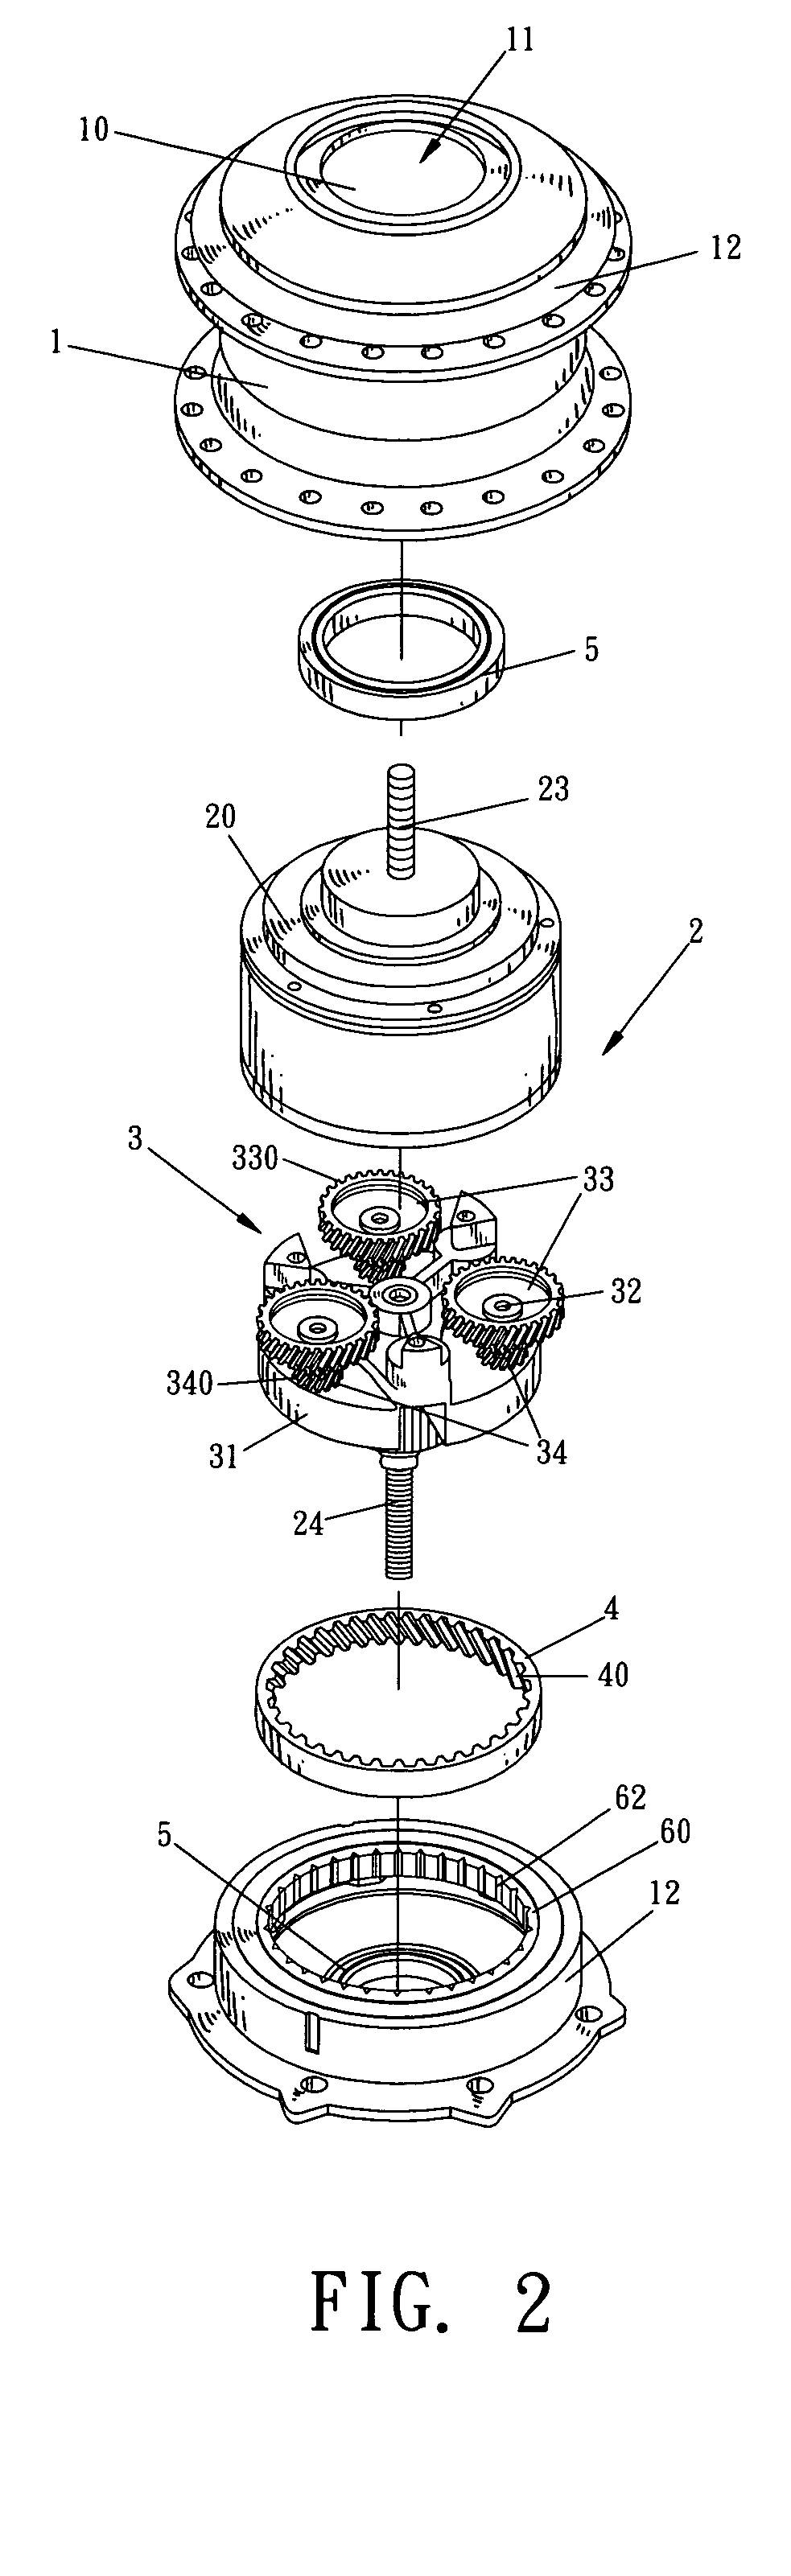 Hub motor mechanism